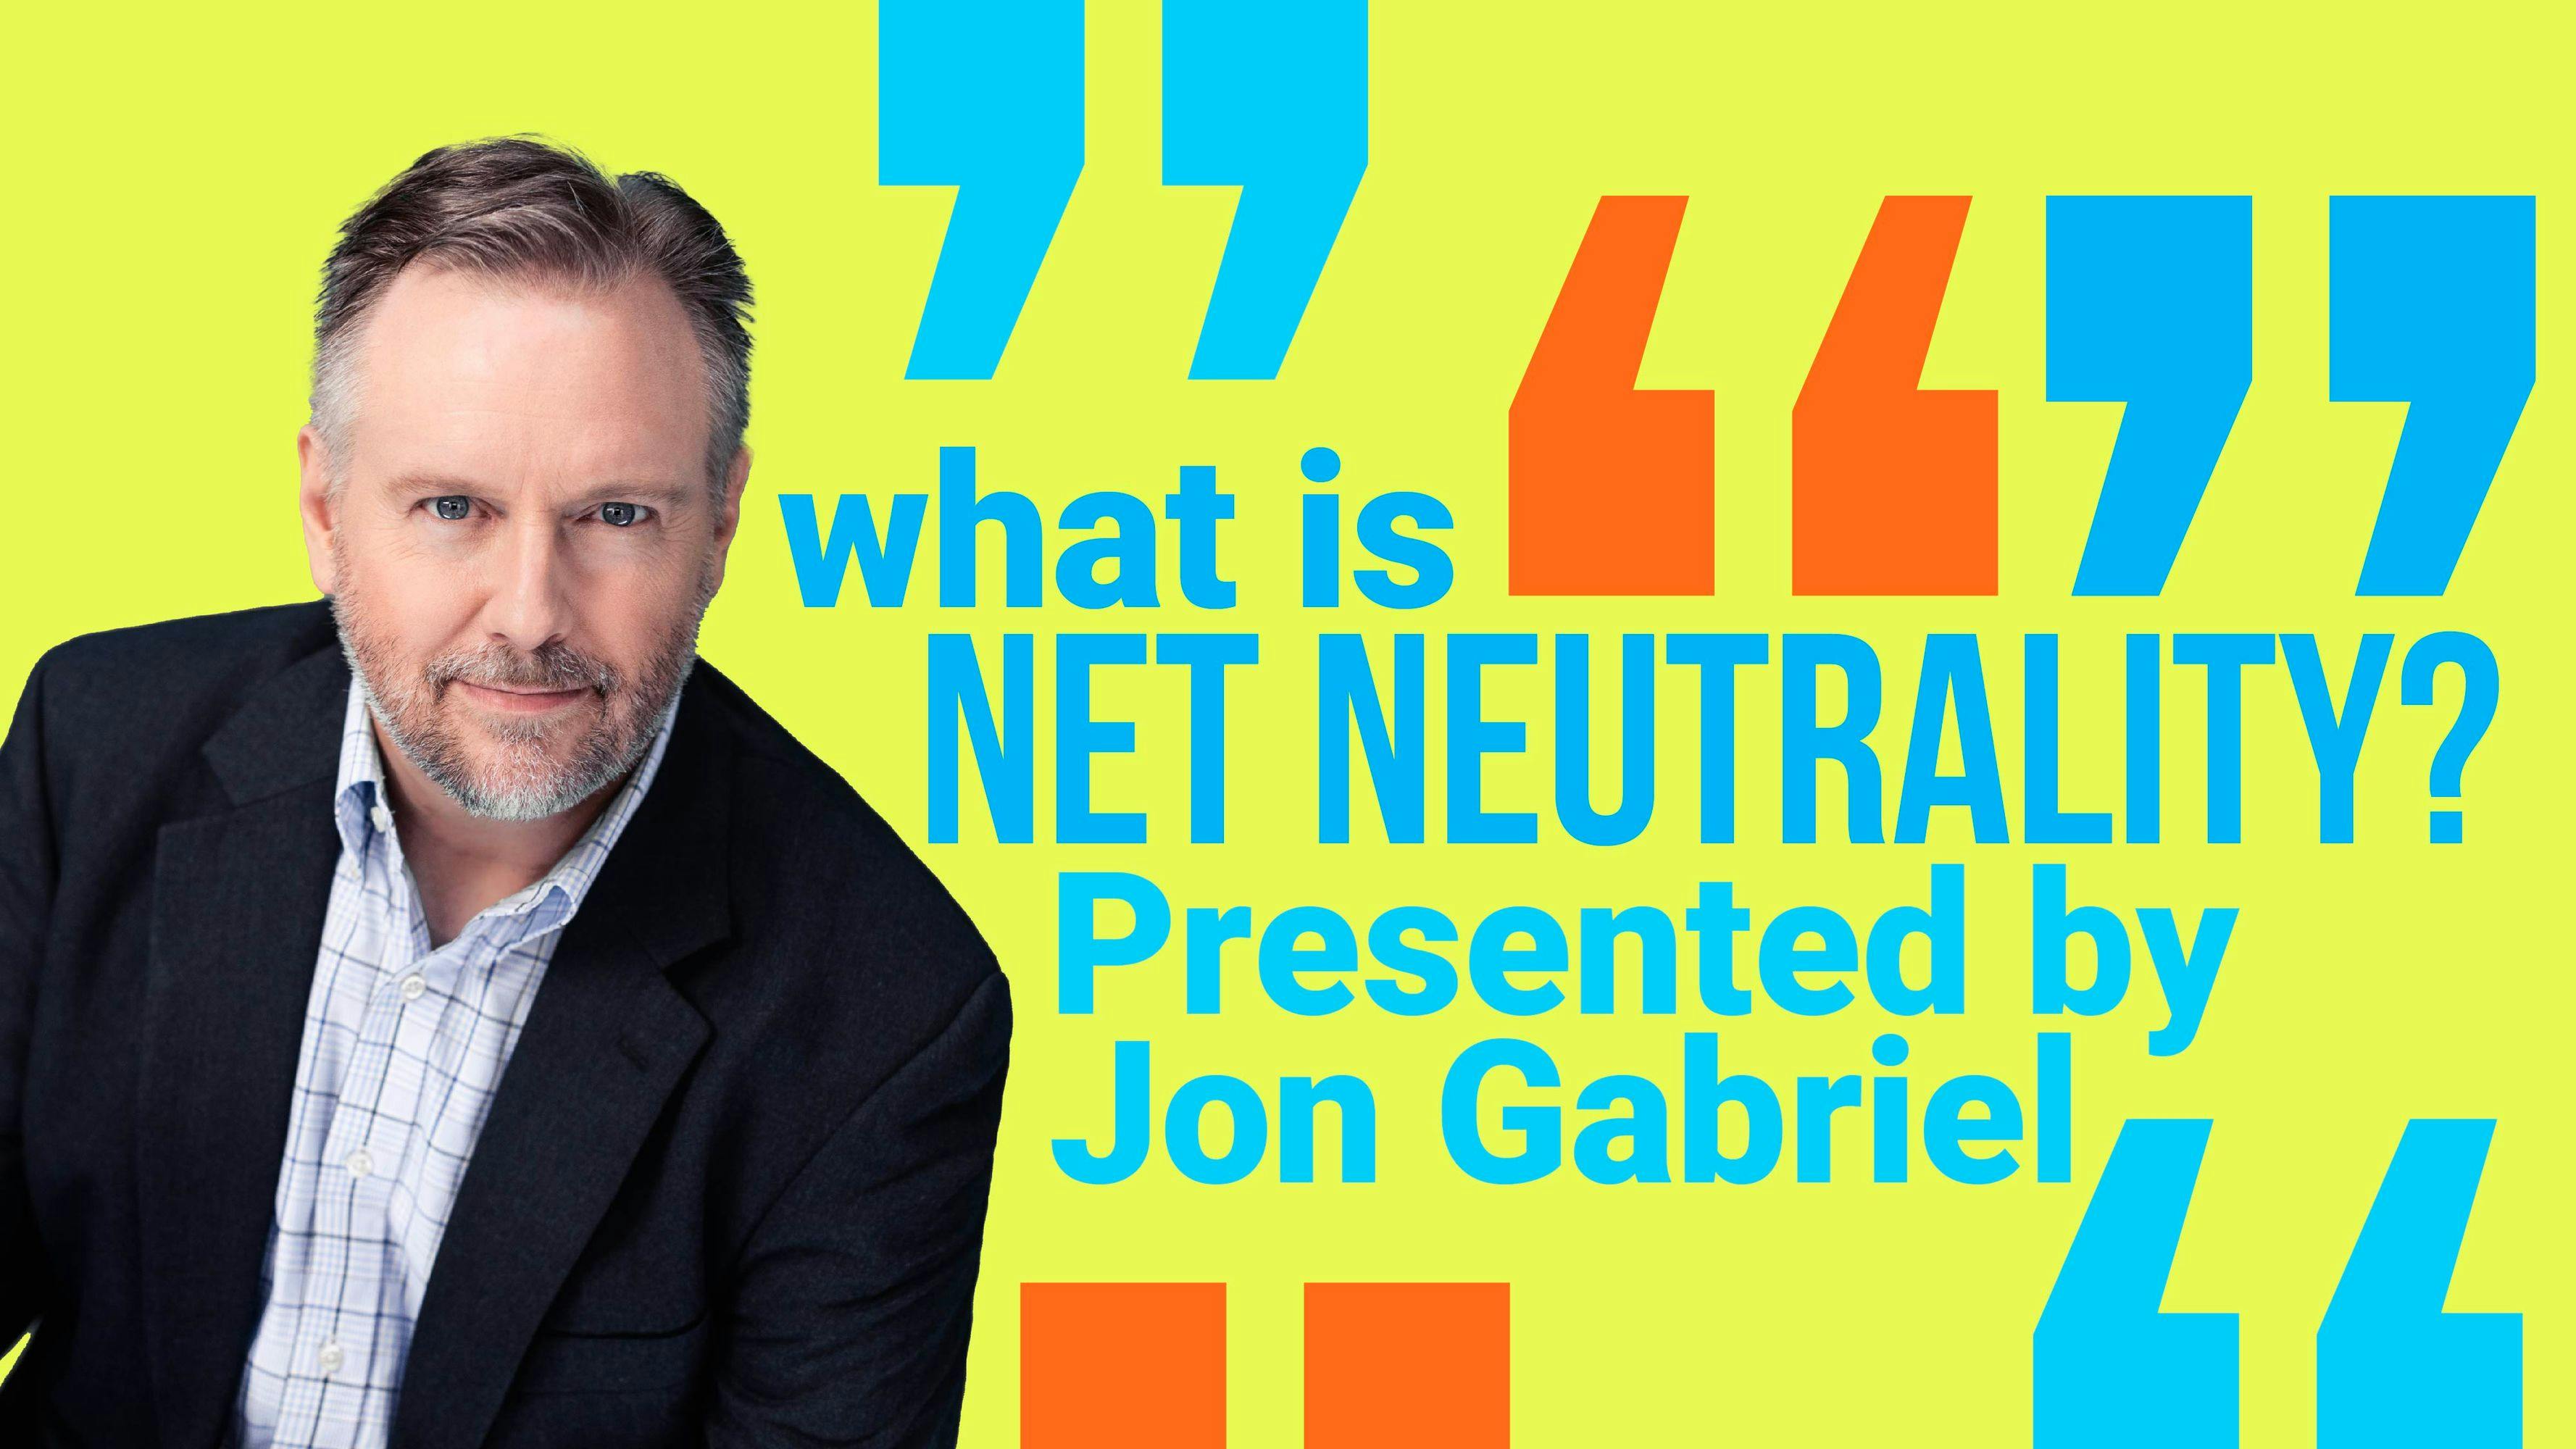 What Is Net Neutrality?